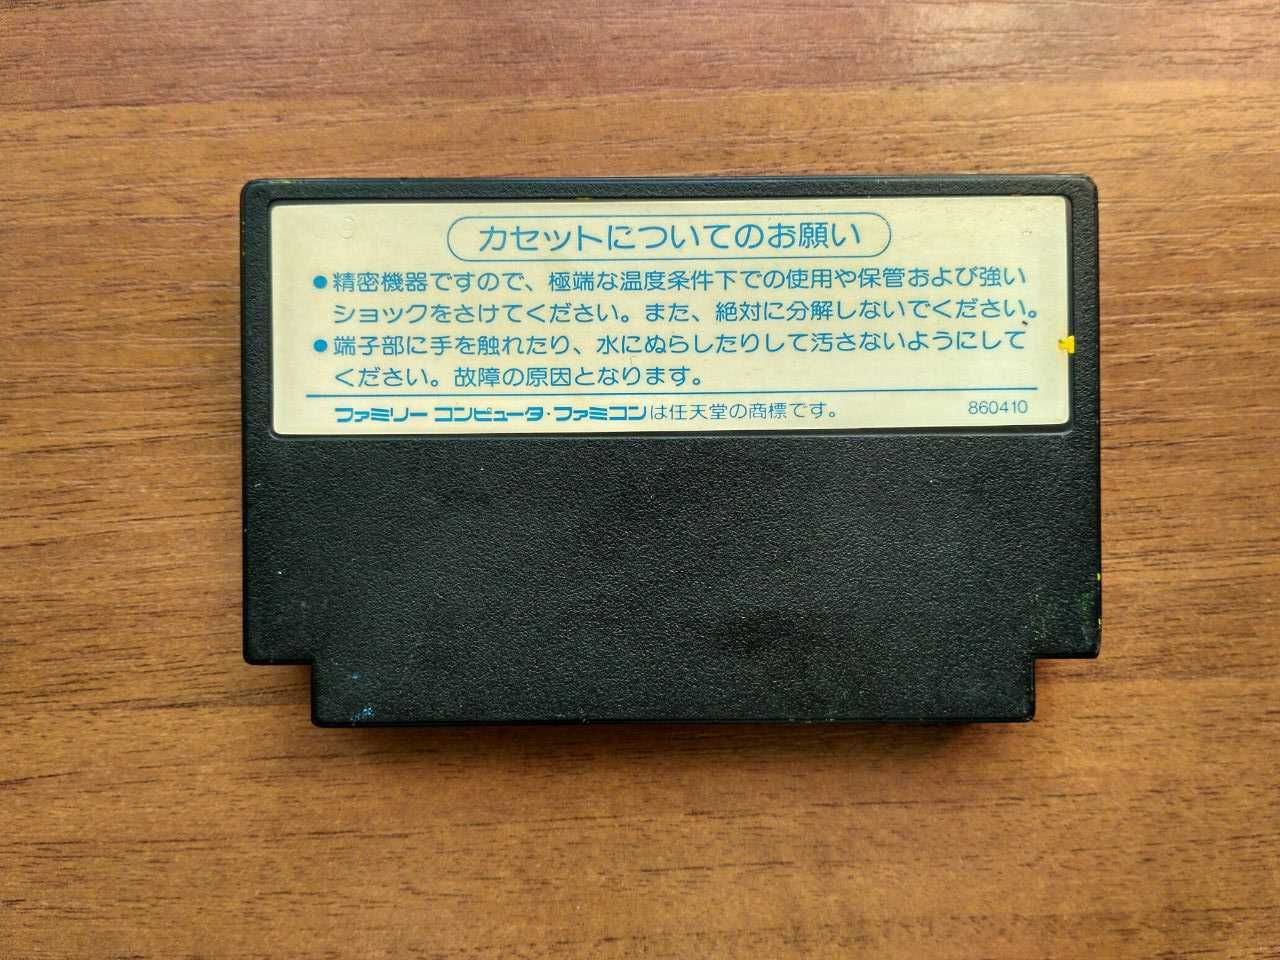 Картриджи Famicom (dendy, денди) Mad City